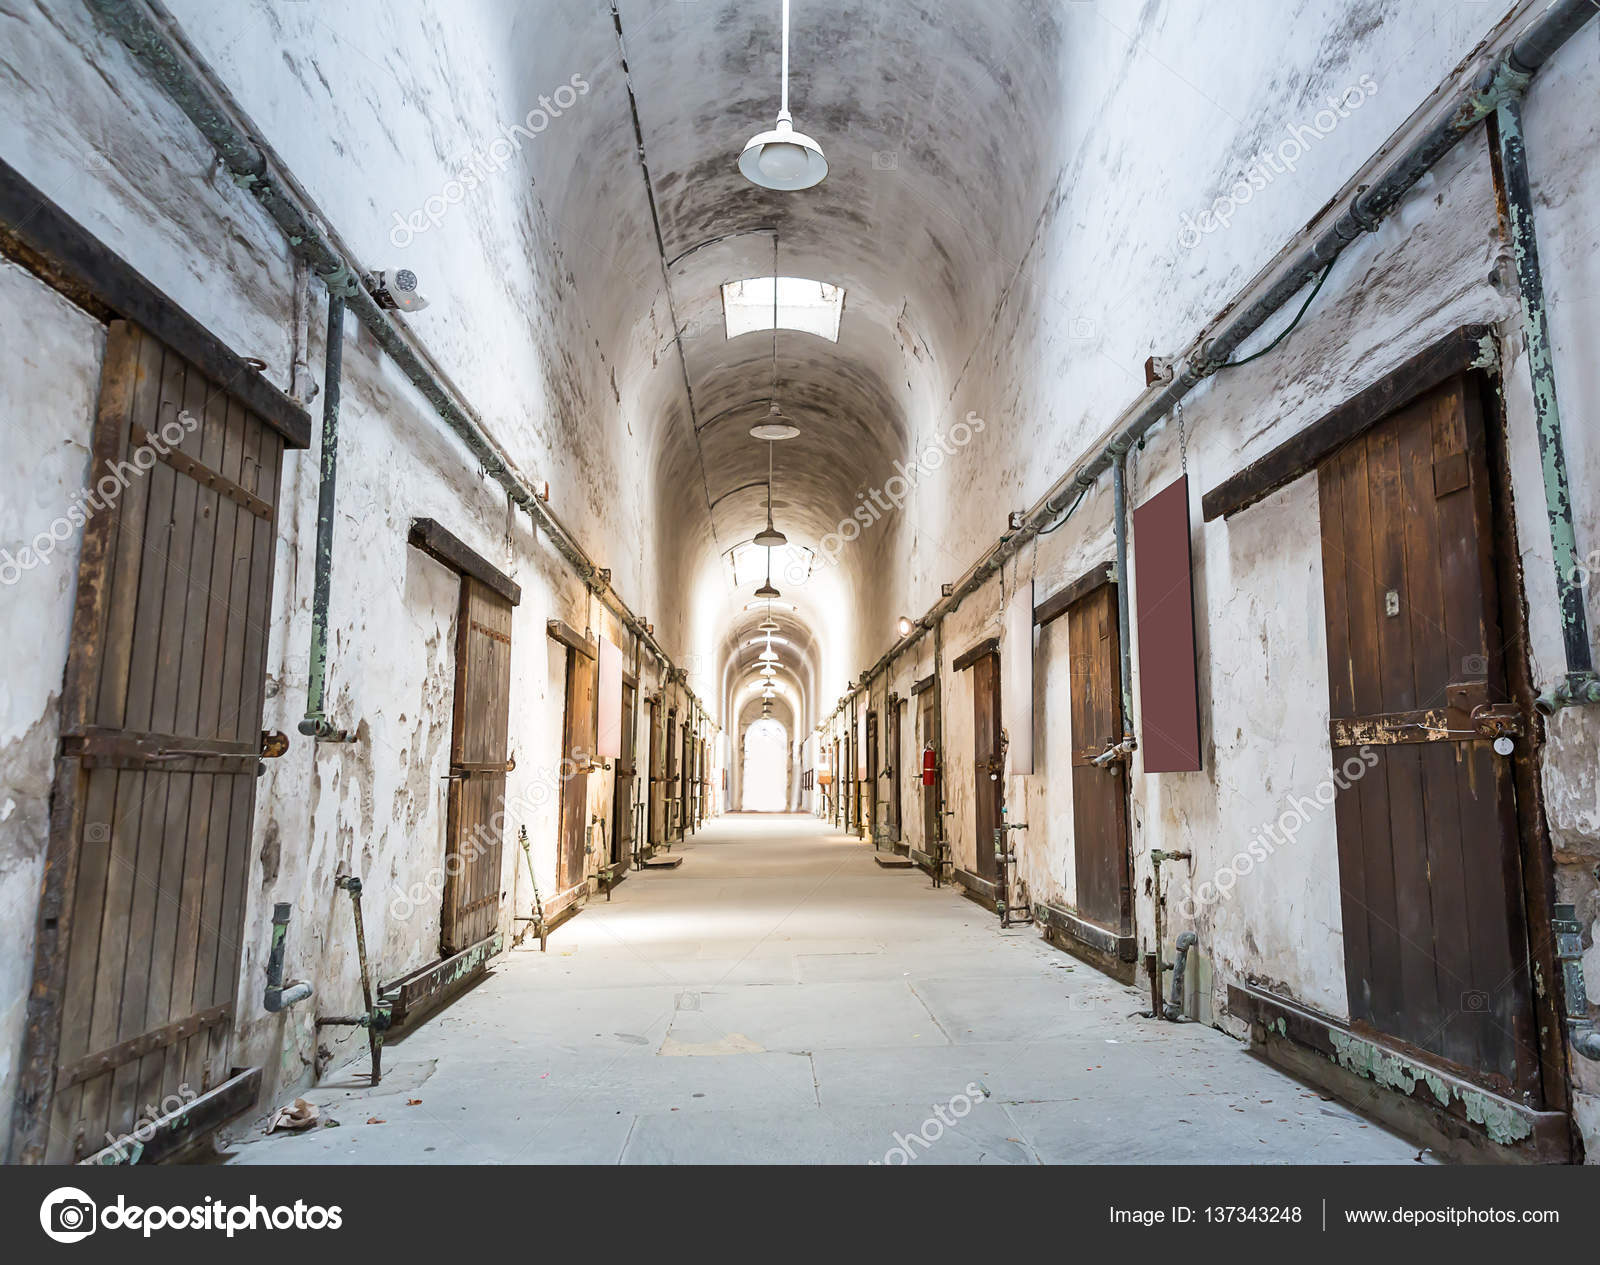 old prison interior — Stock Photo © Nomadsoul1 #137343248